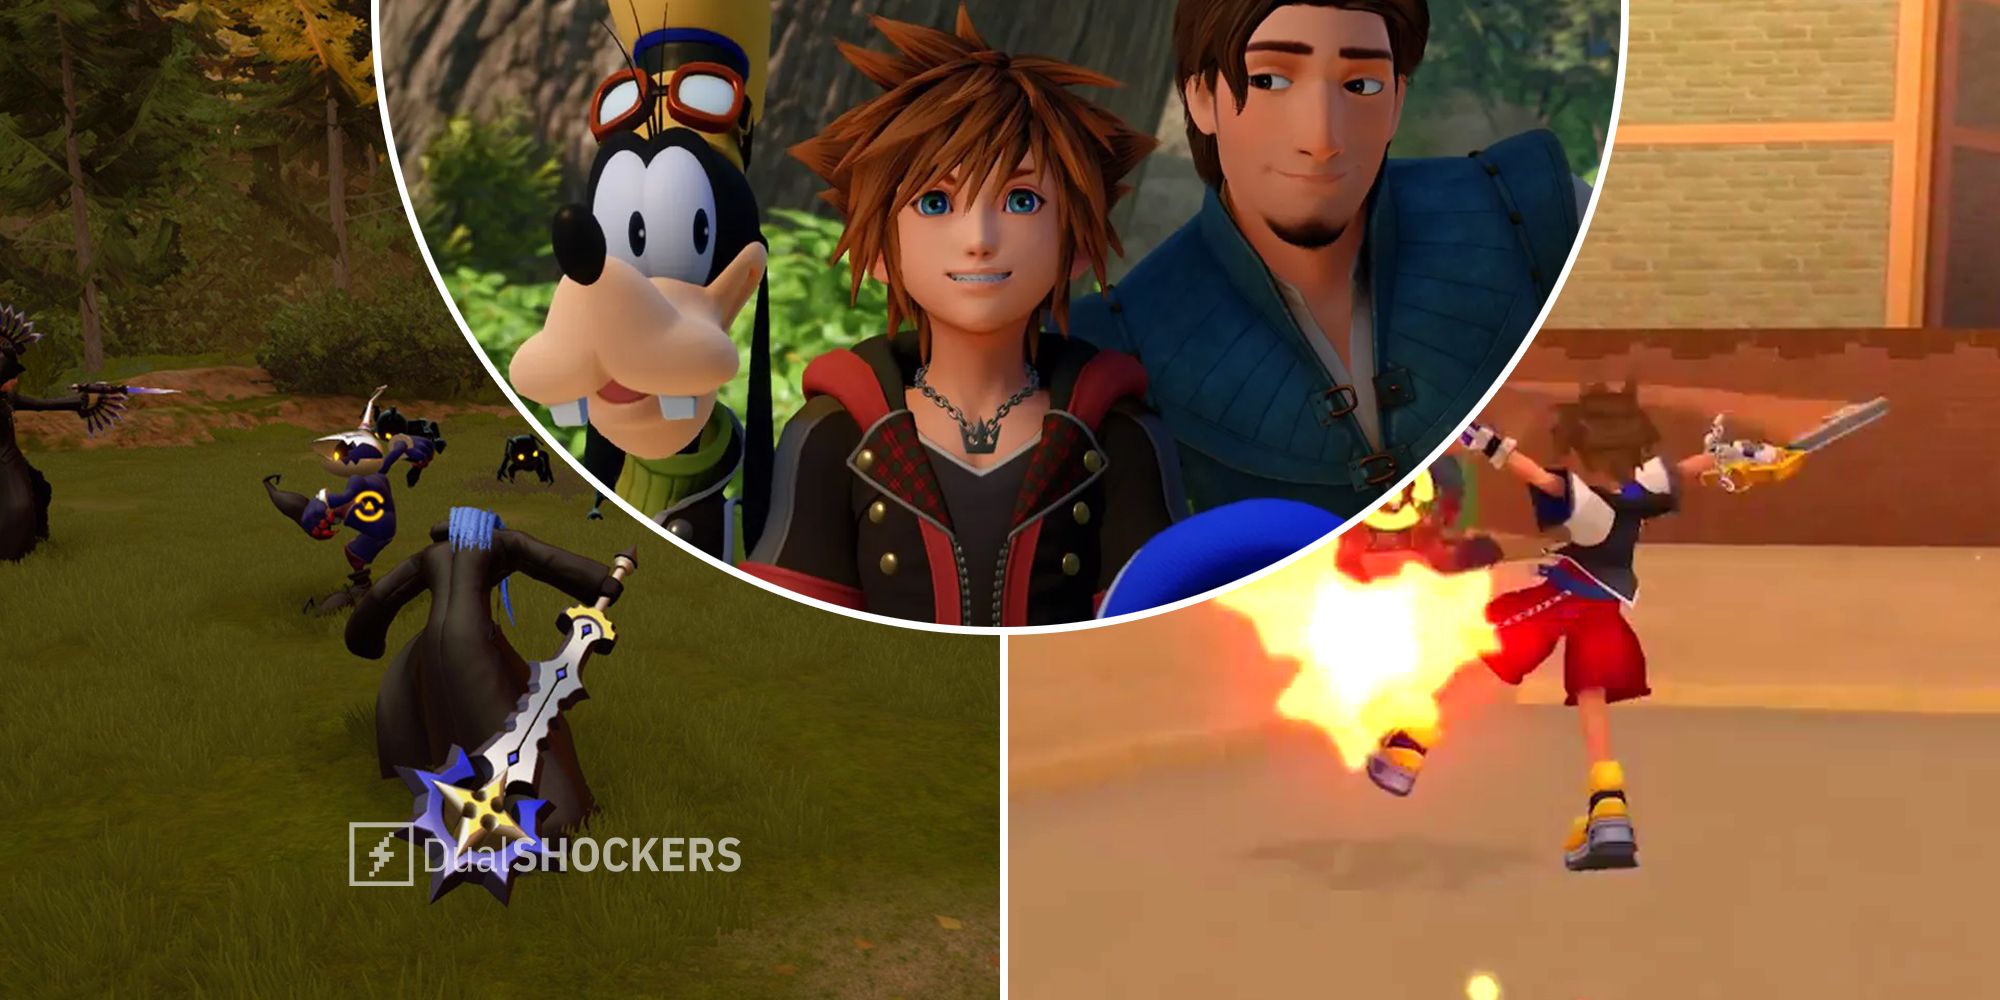 Kingdom Hearts 358/2 Days à esquerda, Kingdom Hearts 3 no meio, Kingdom Hearts: Re: Chain of Memories à direita